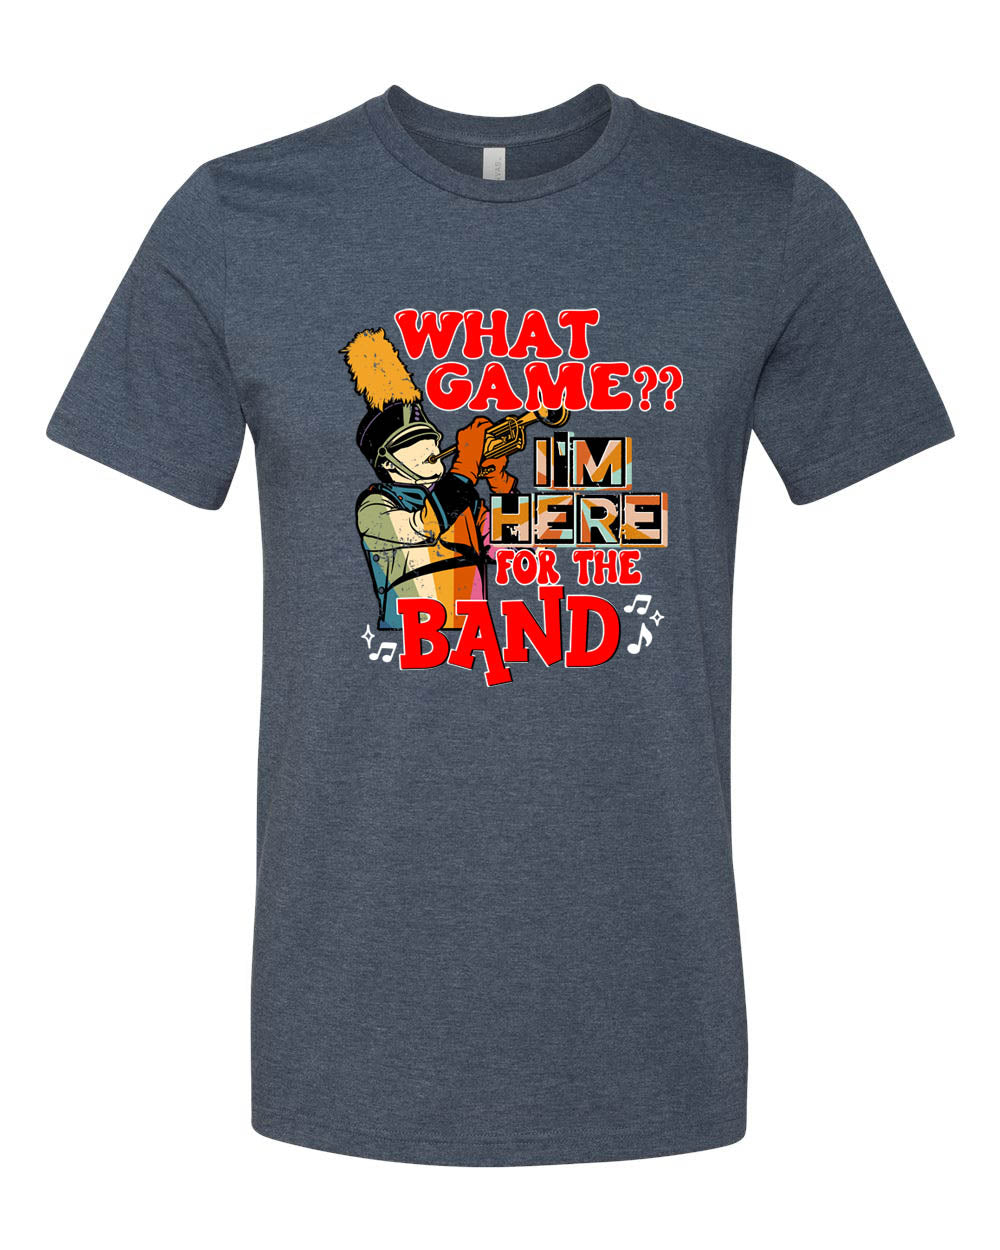 North Warren Marching Band Design 2 T-Shirt